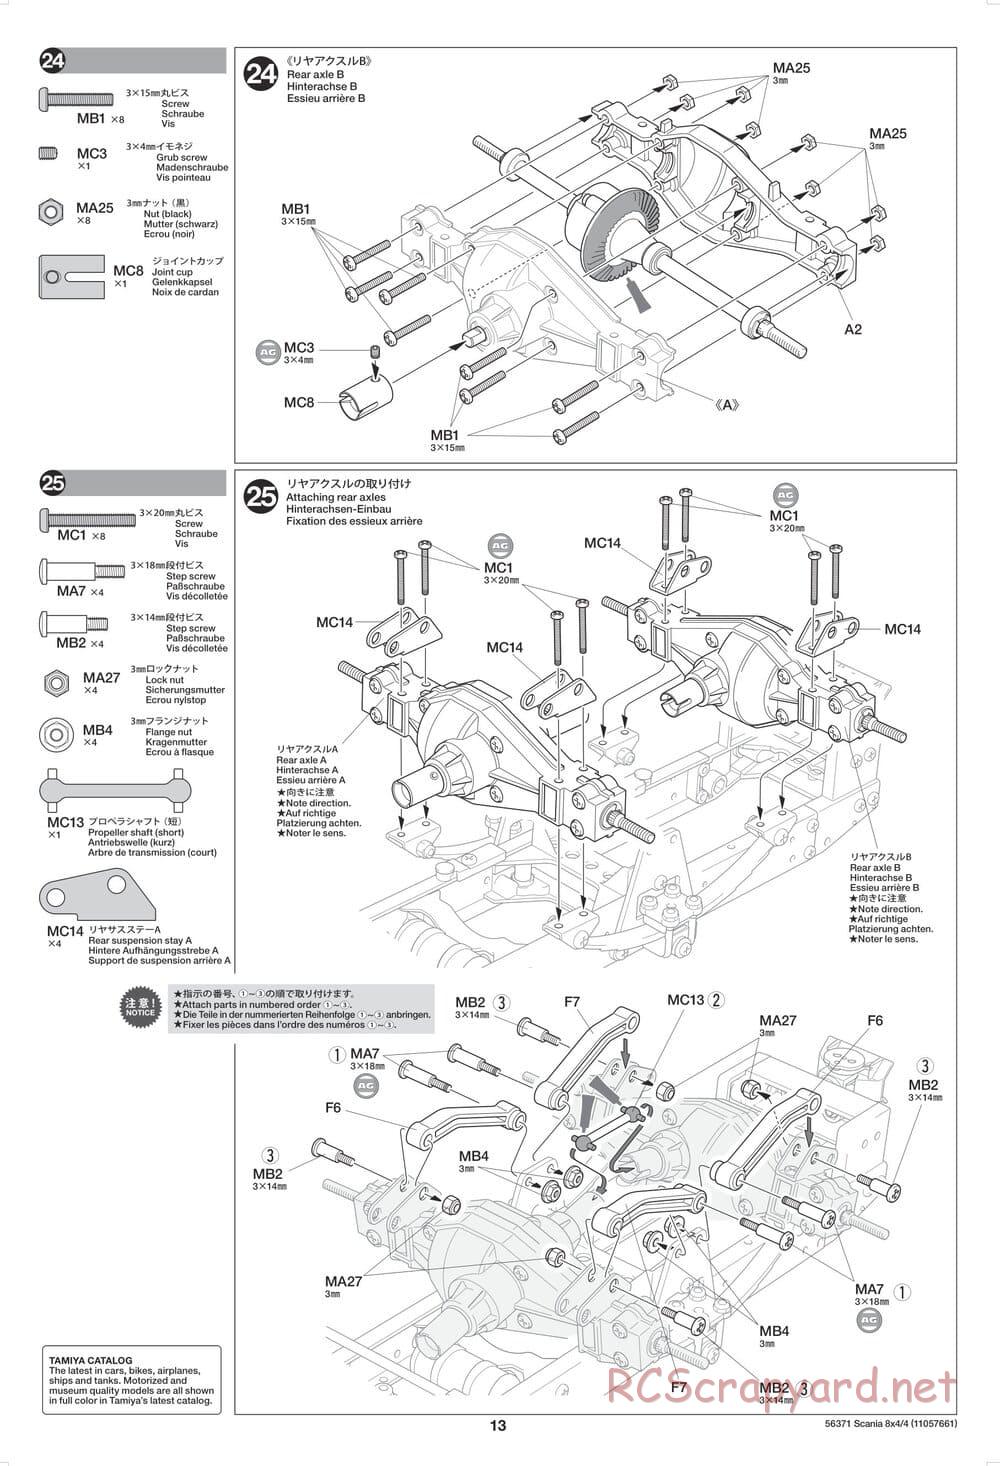 Tamiya - Scania 770 S 8x4/4 Chassis - Manual - Page 13